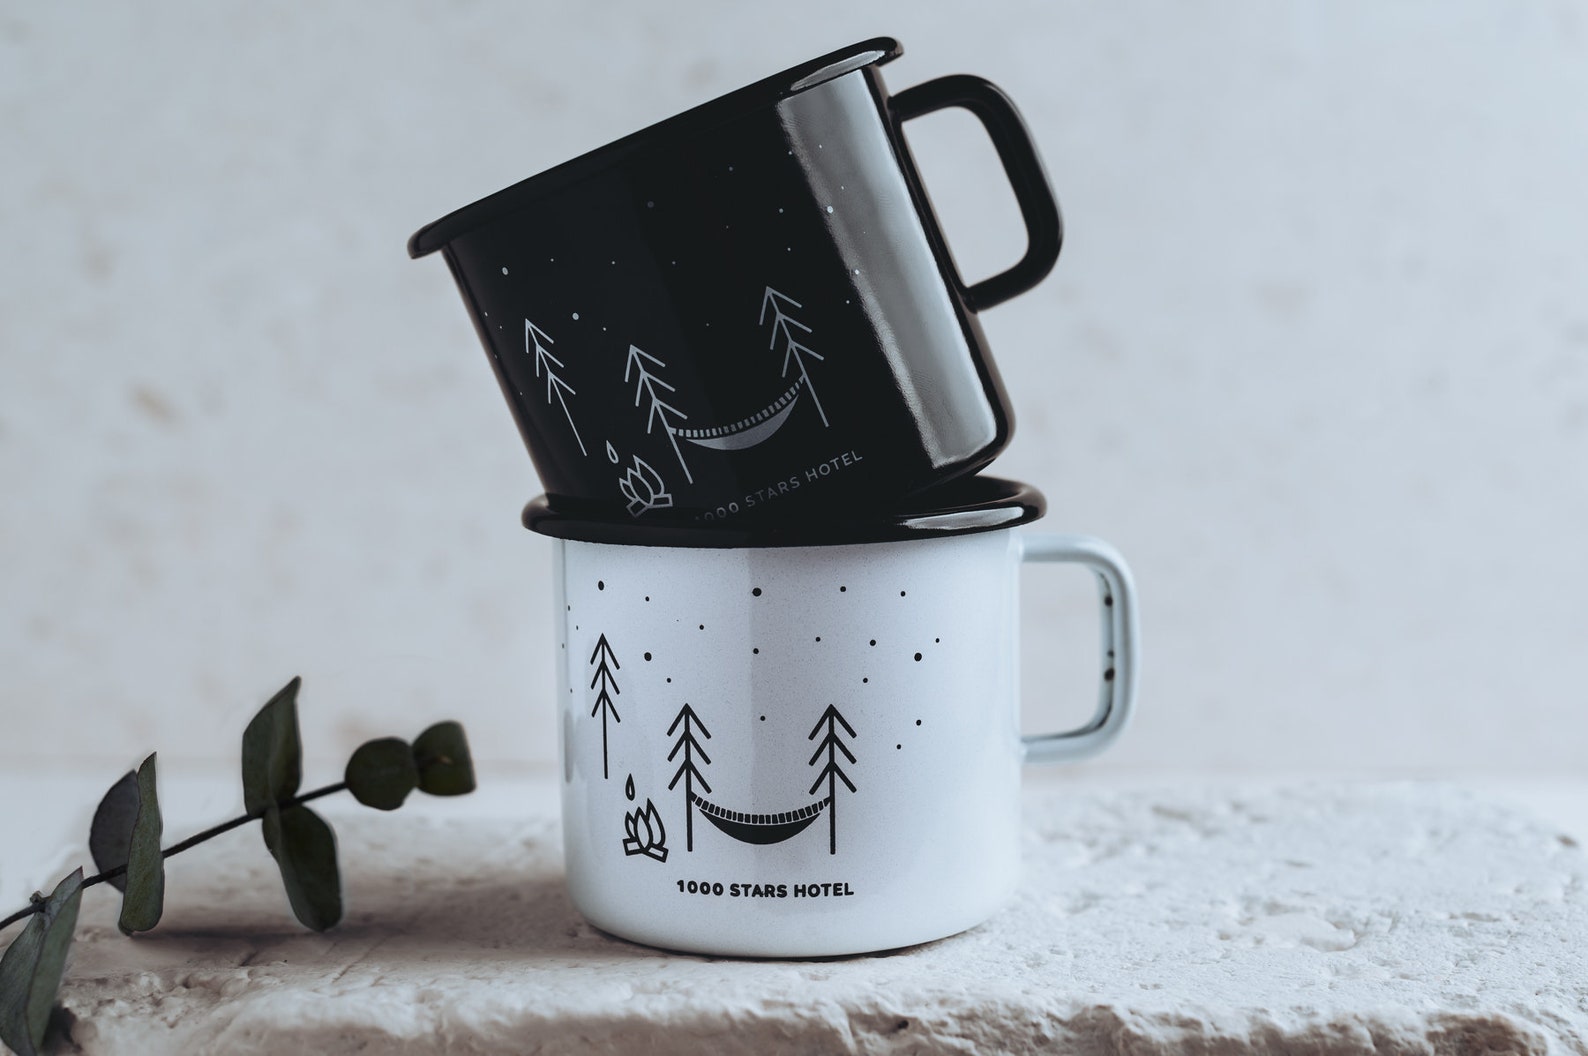 Porte-tasses & porte-mugs : 17 idées originales à copier